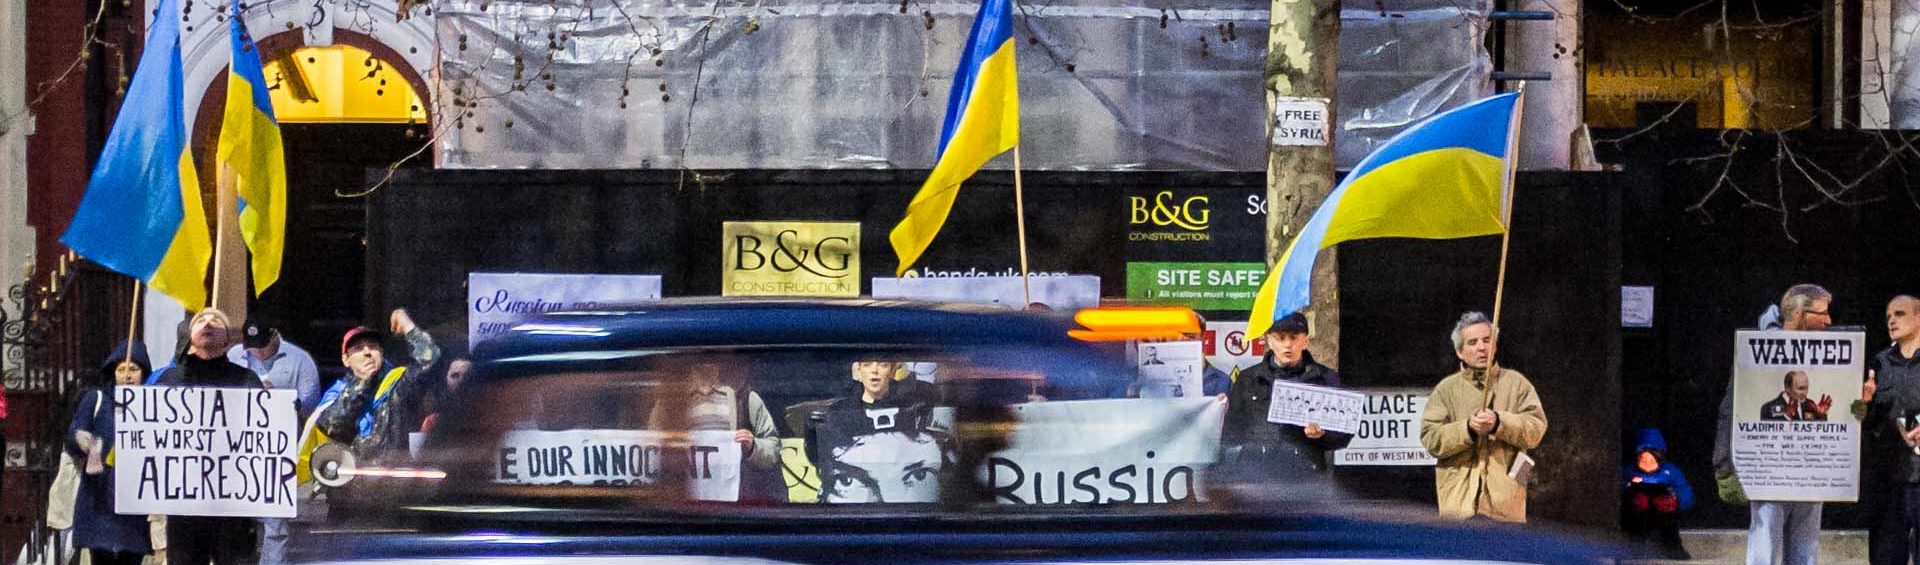 Ukrainian prostest in London, ukrainian protest london